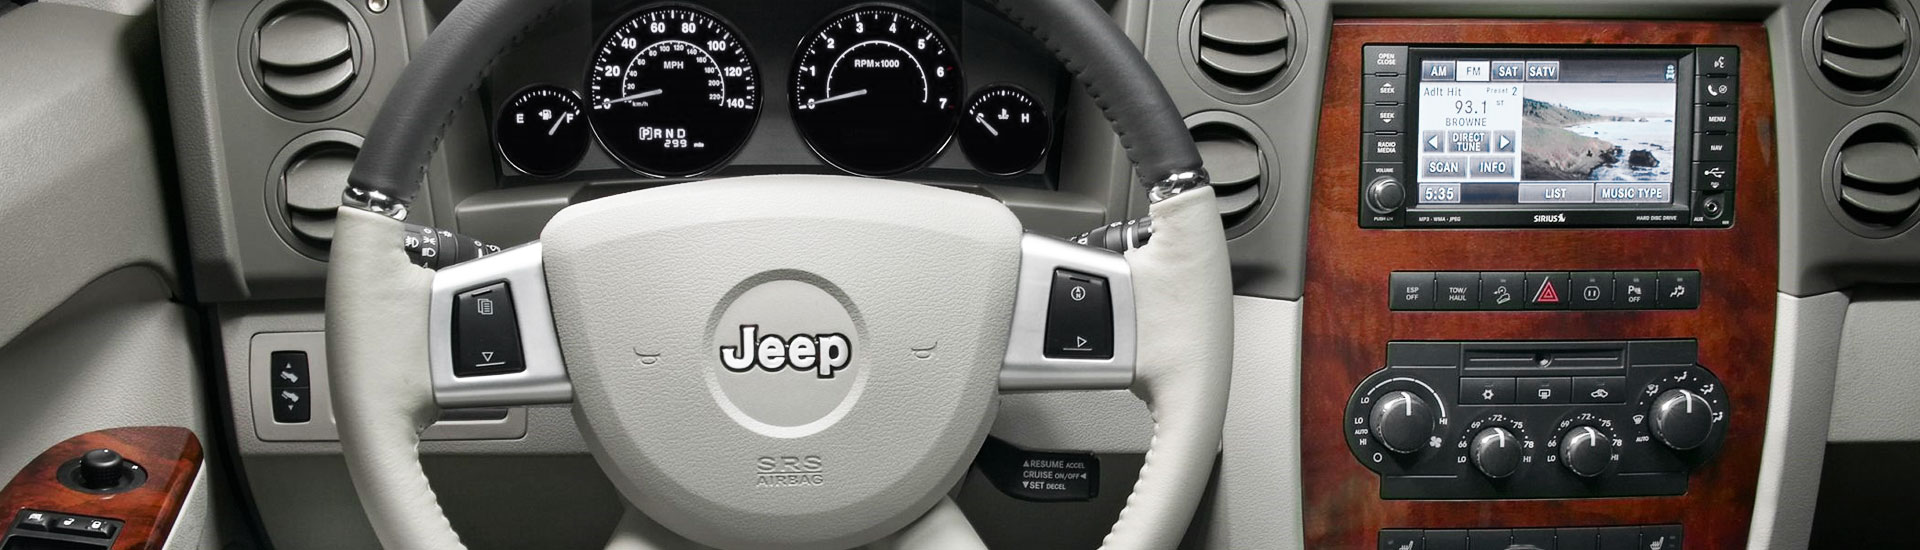 2010 Jeep Patriot Custom Dash Kits